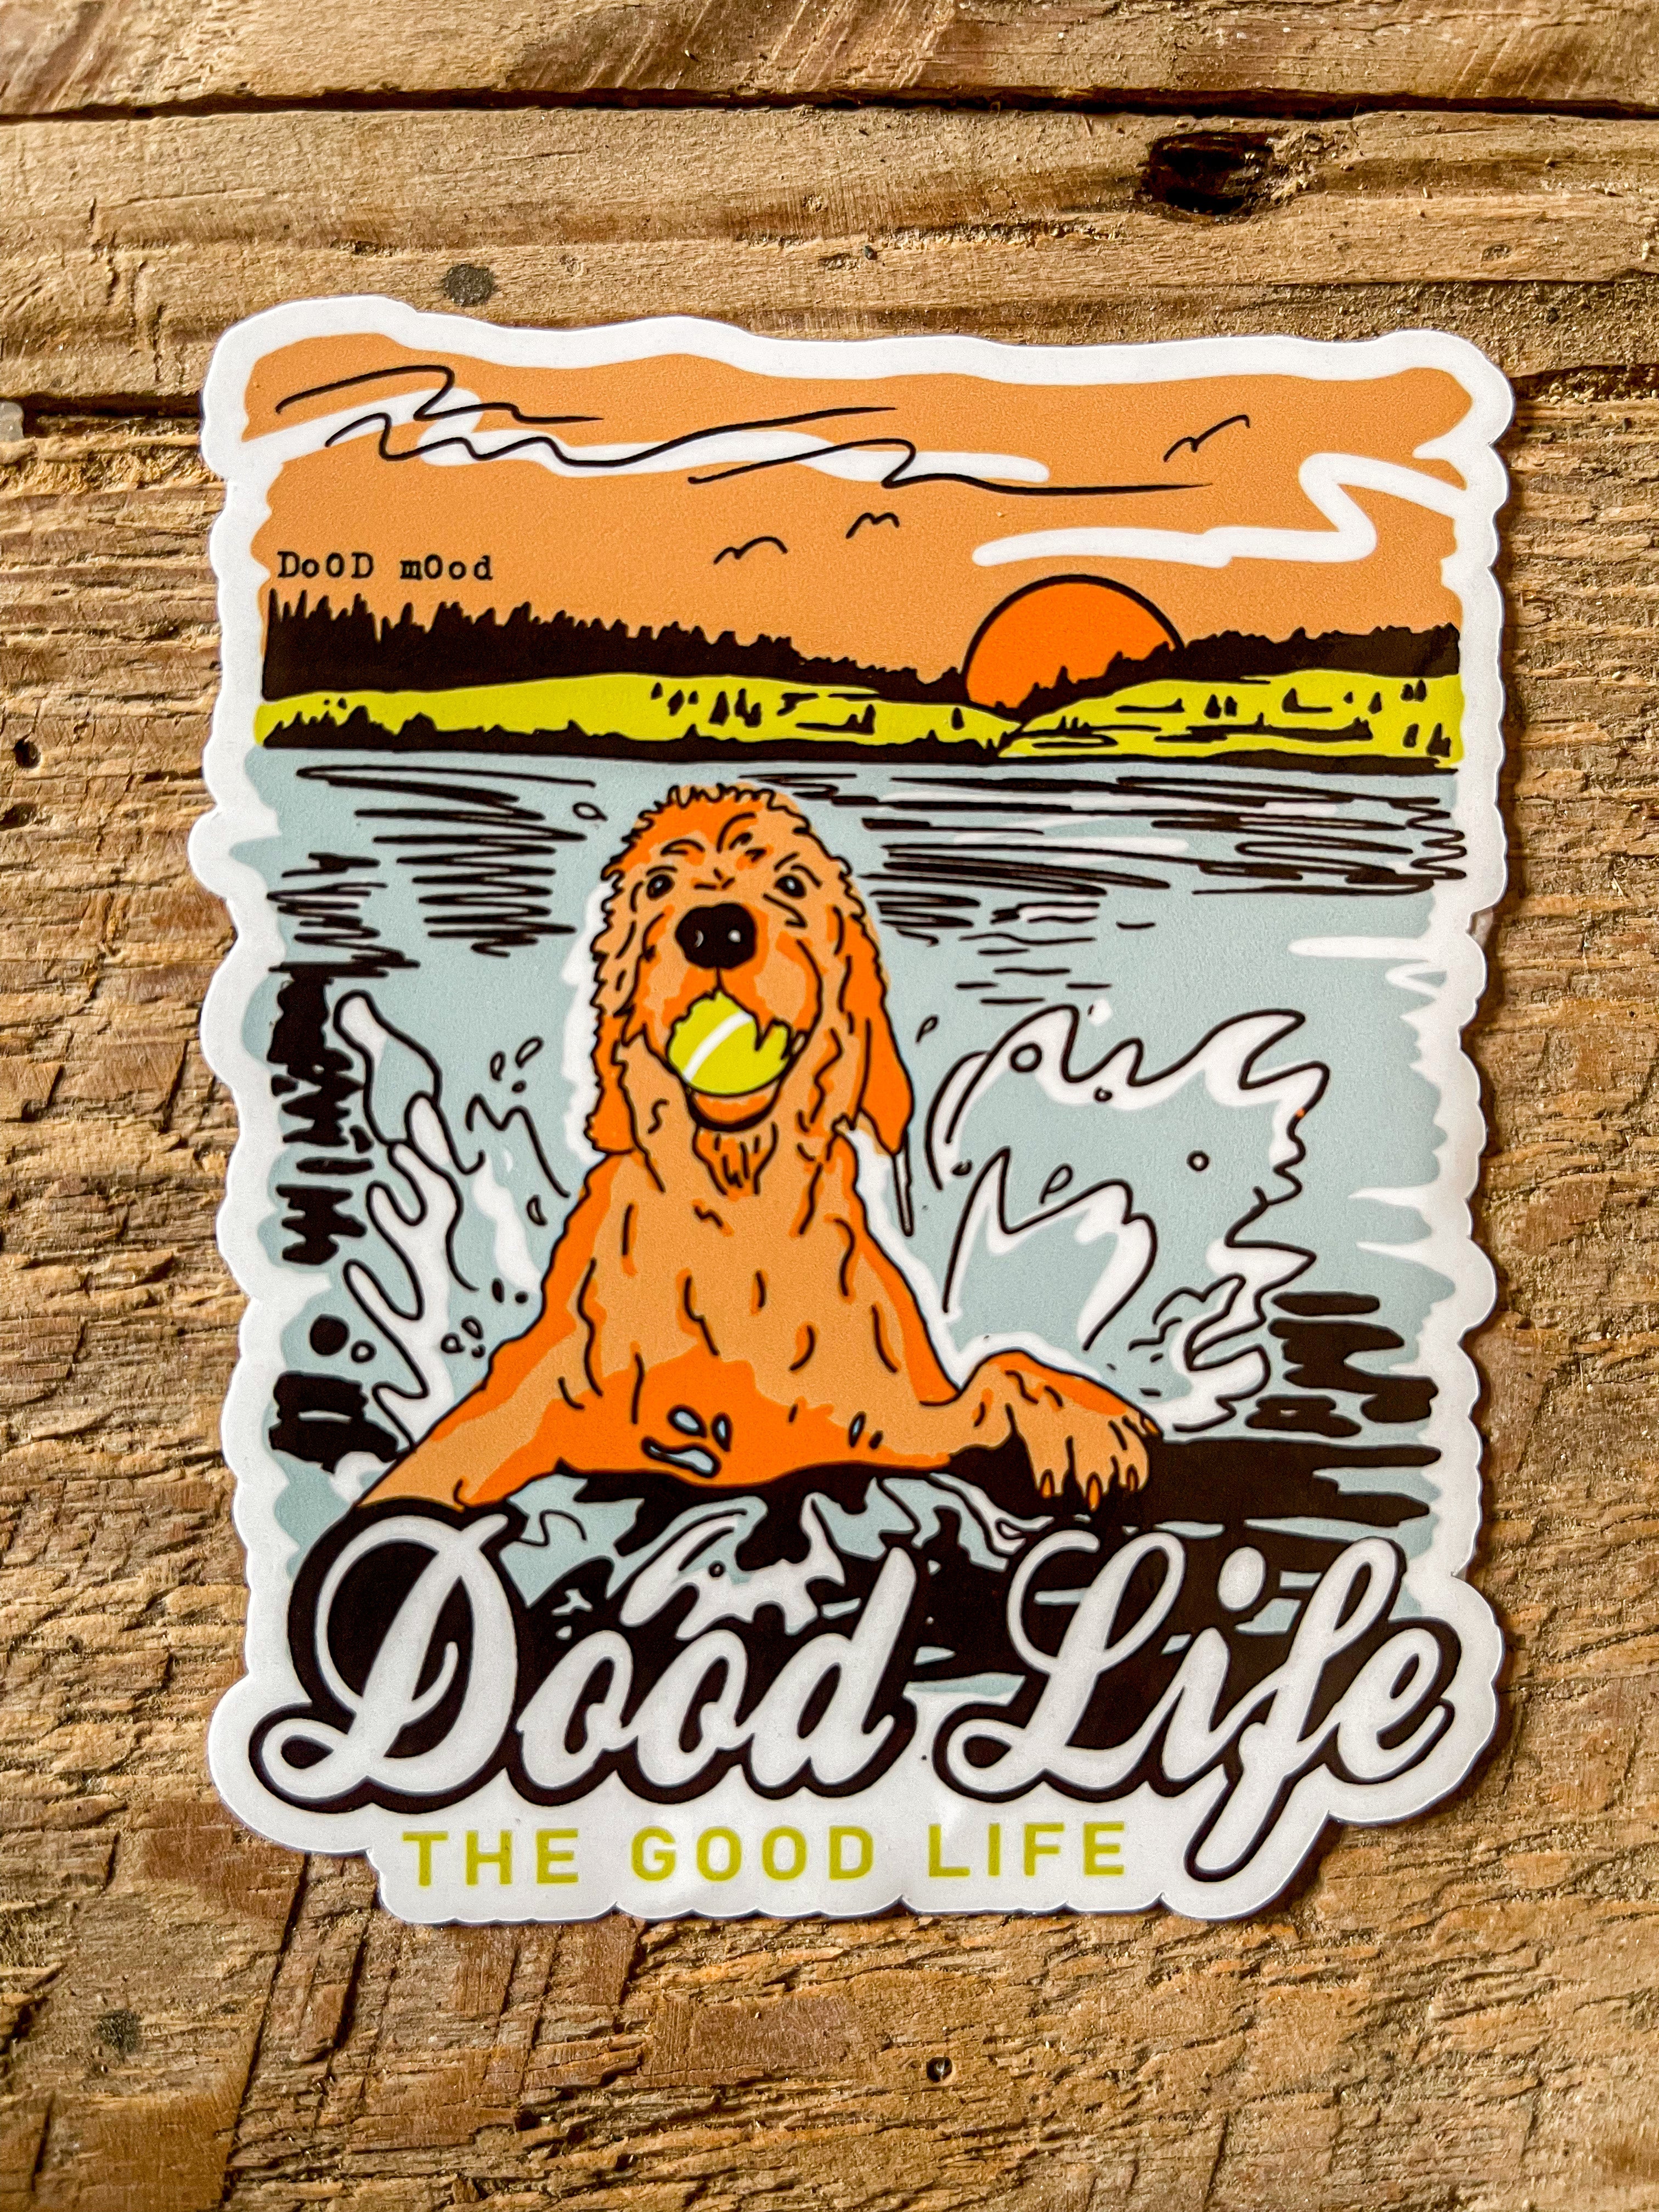 Dood Life Sticker